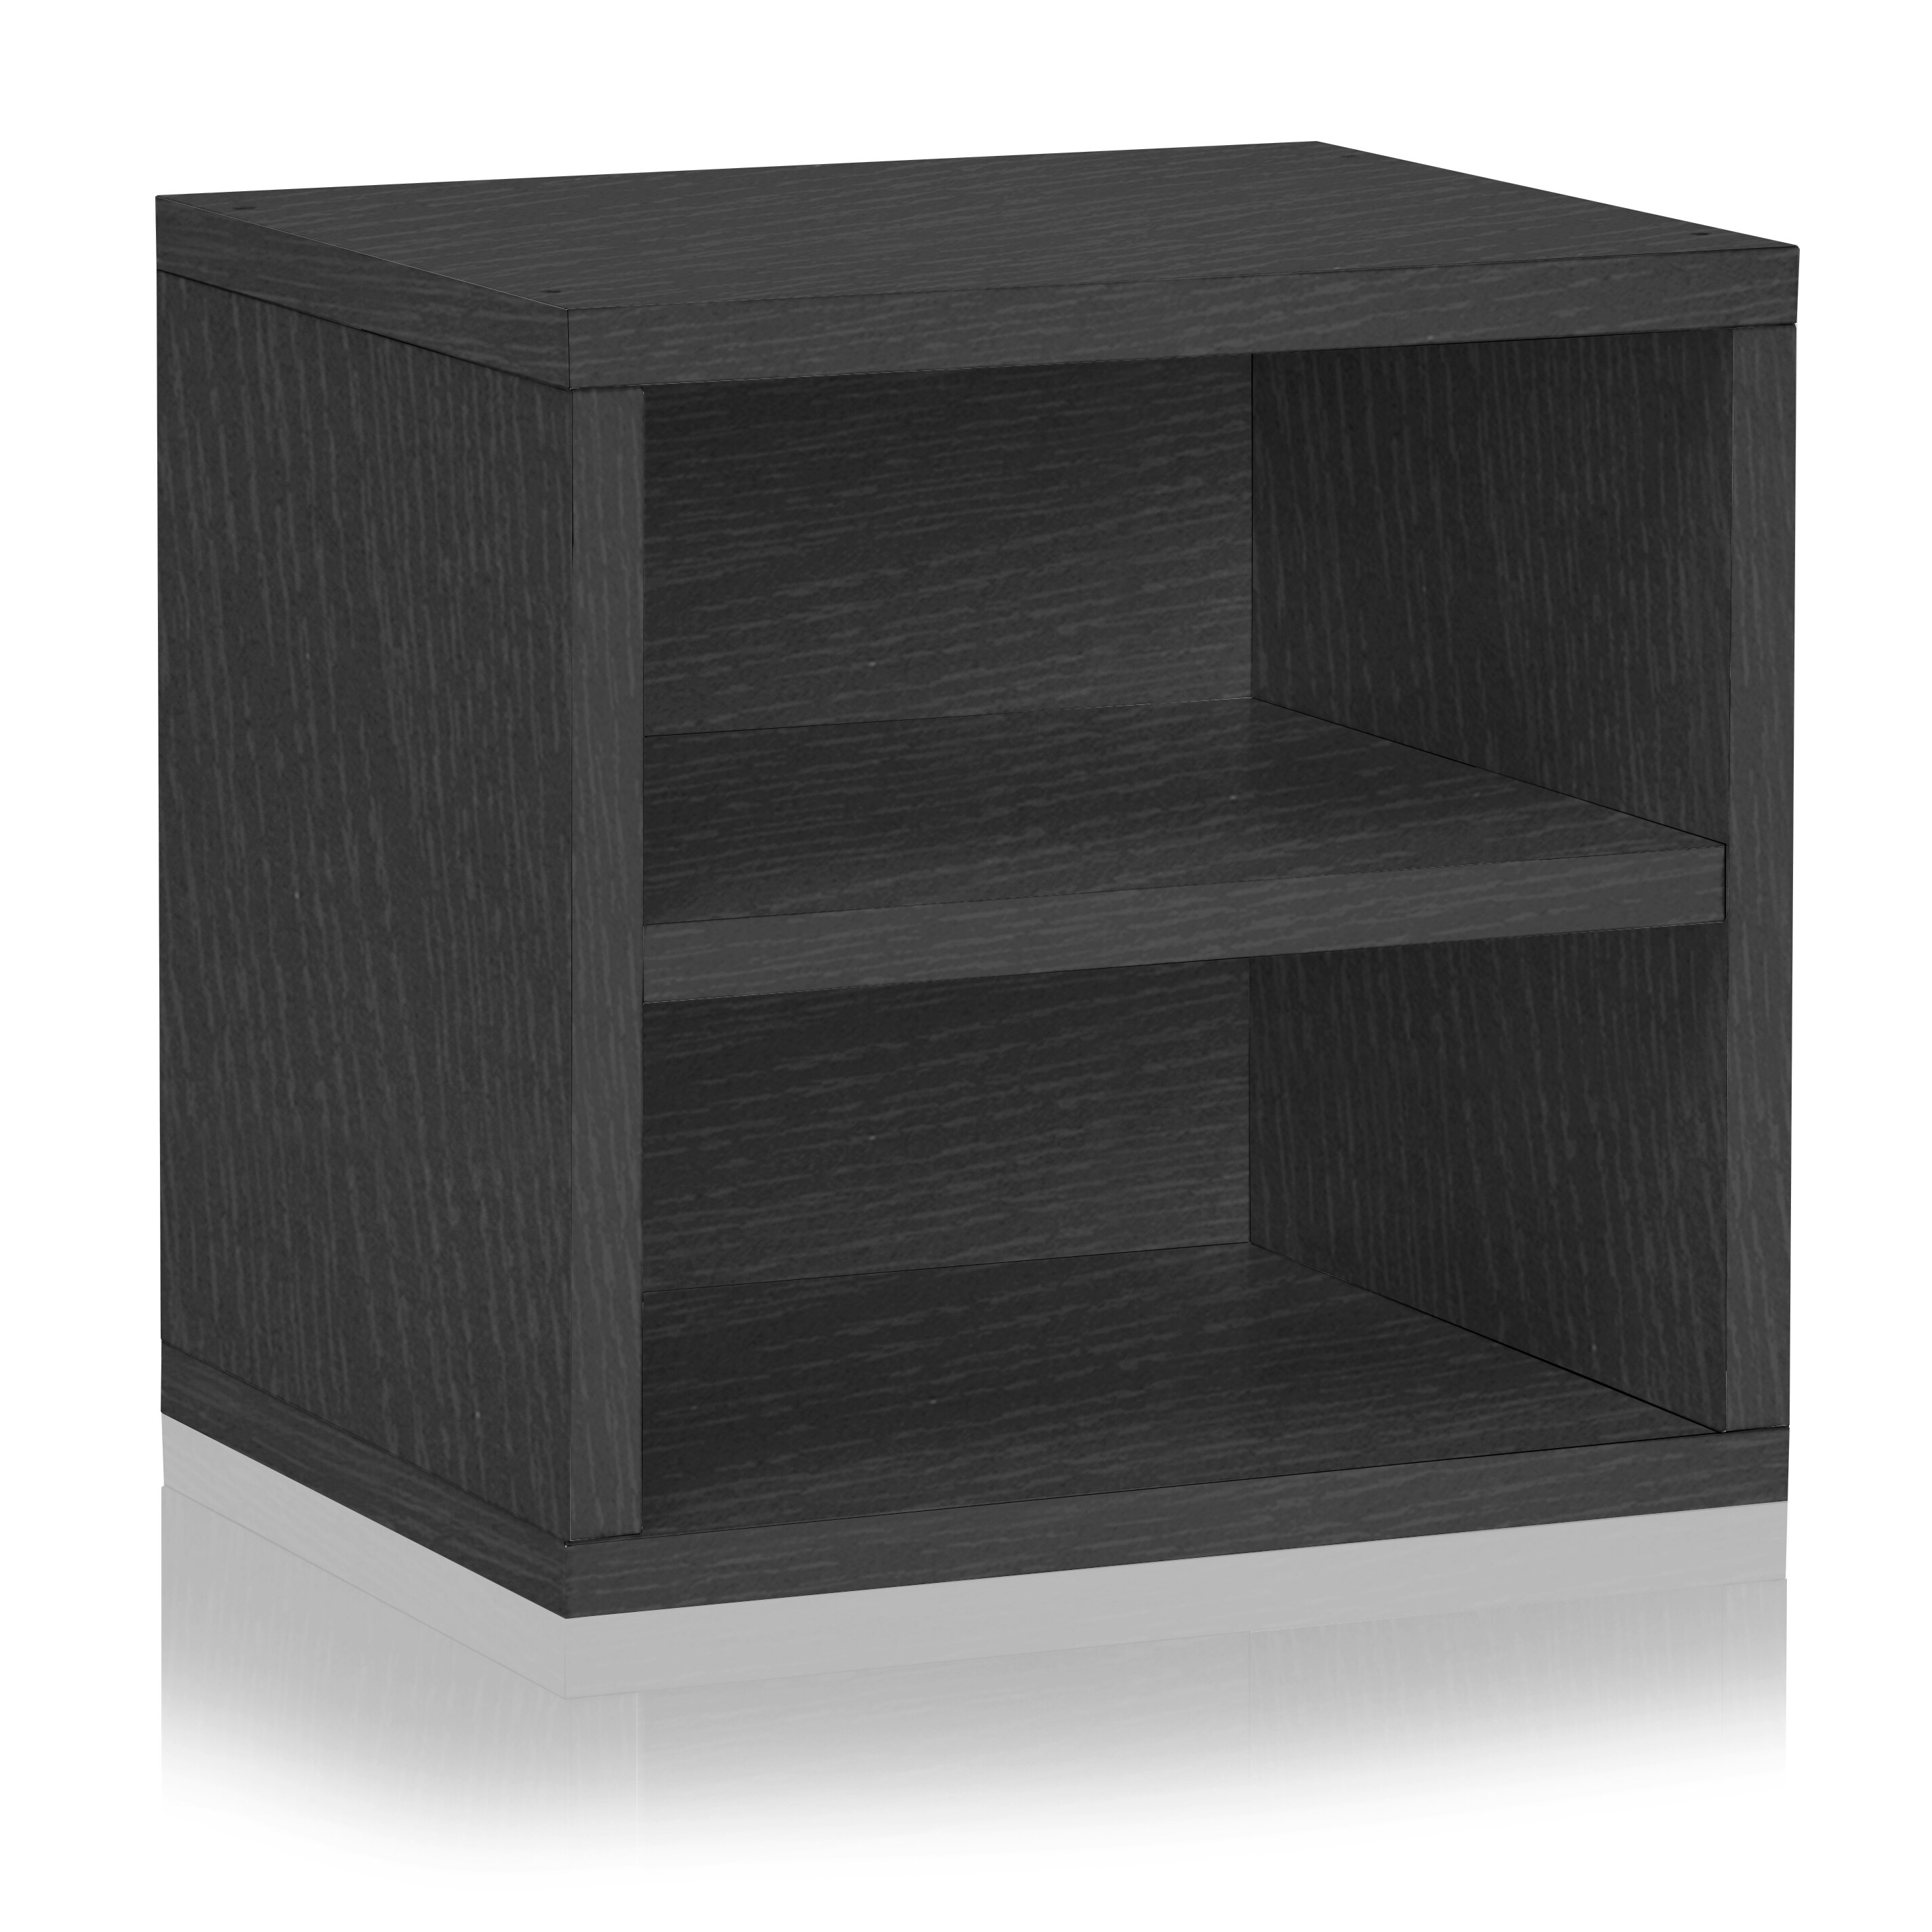 Life Story 3 Drawer Stackable Shelf Organizer Storage Drawers, Black (2 Pack)